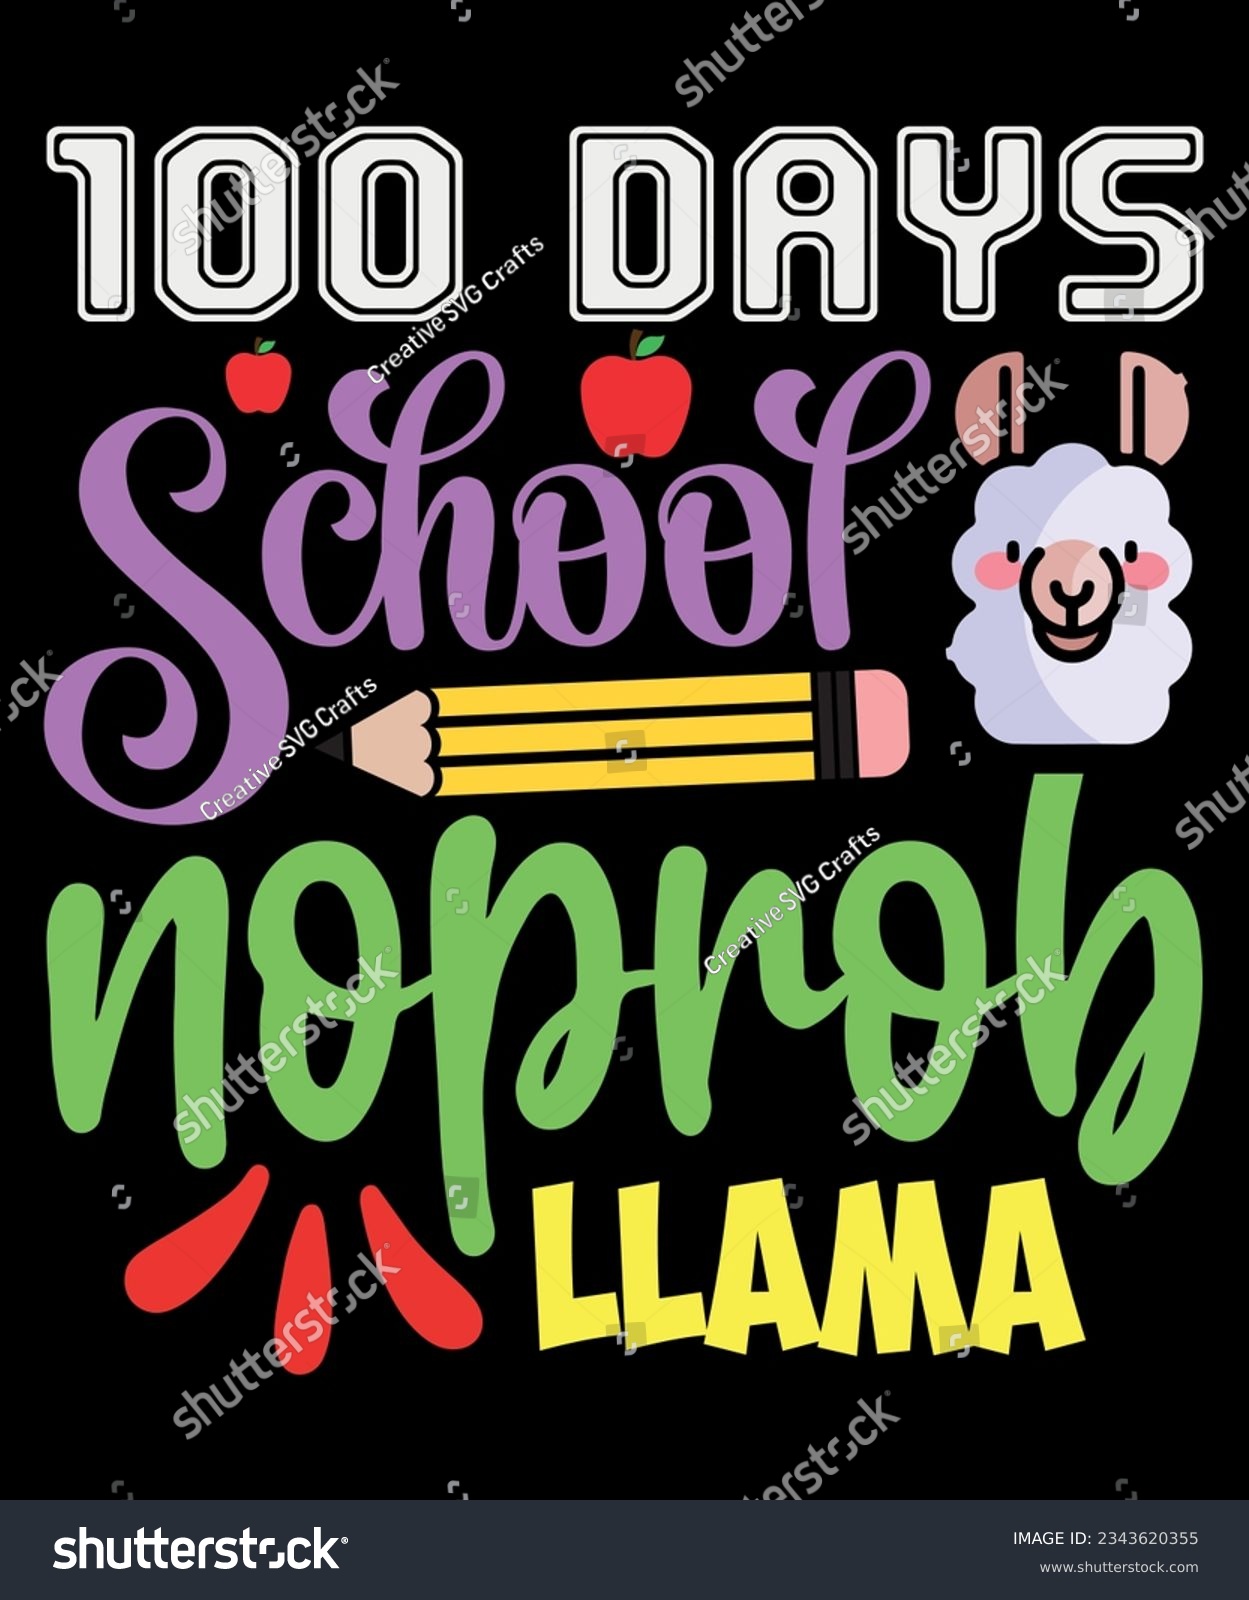 SVG of 100 Days School no prob llama, Happy 100 Days, Back To School Shirt, 100 Days of School Shirt, Happy Teacher Shirt, First Day Of School, Shirt Print Template SVG svg